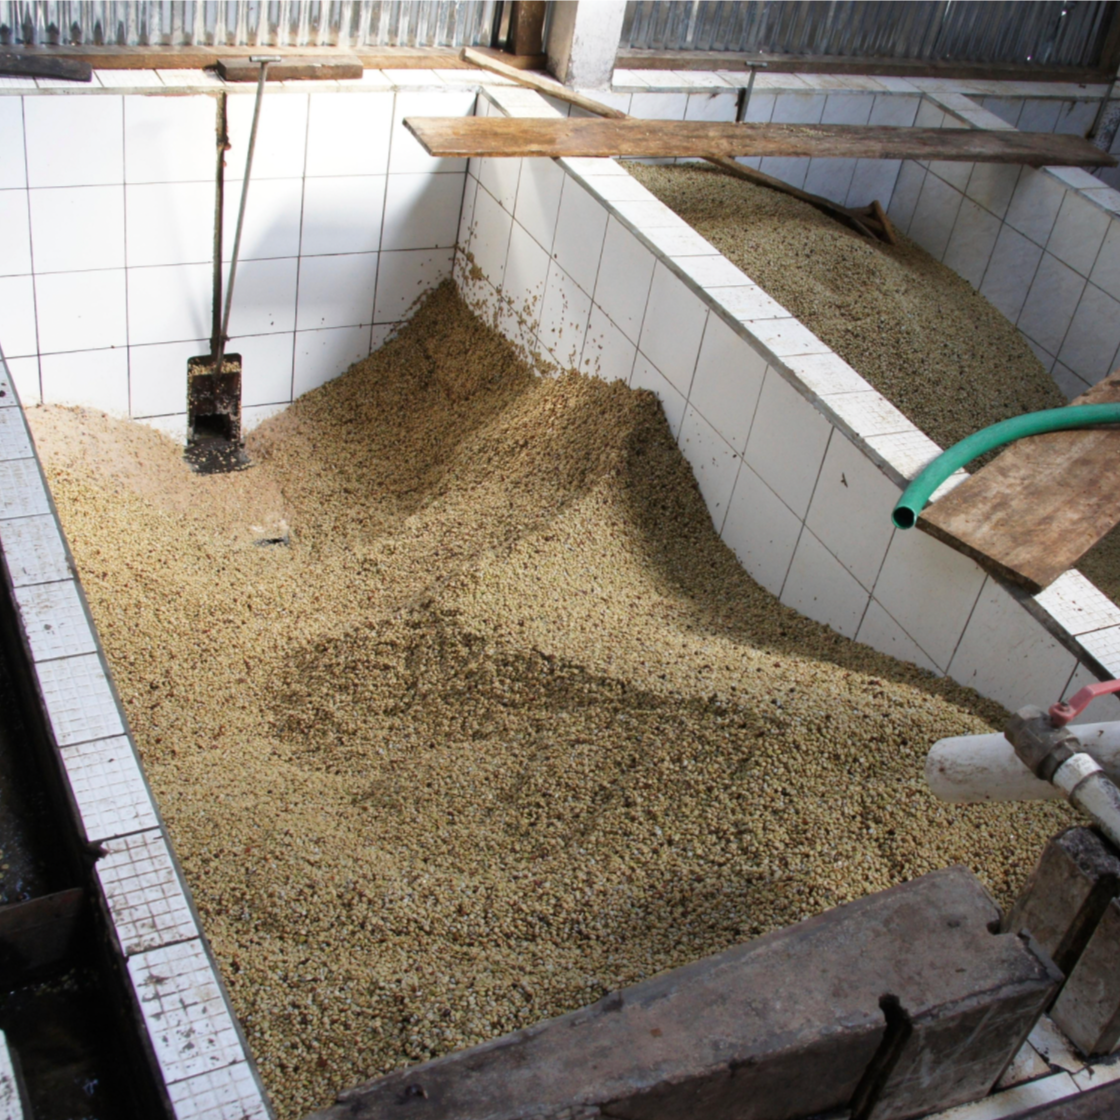 Coffee processing facilities in Honduras